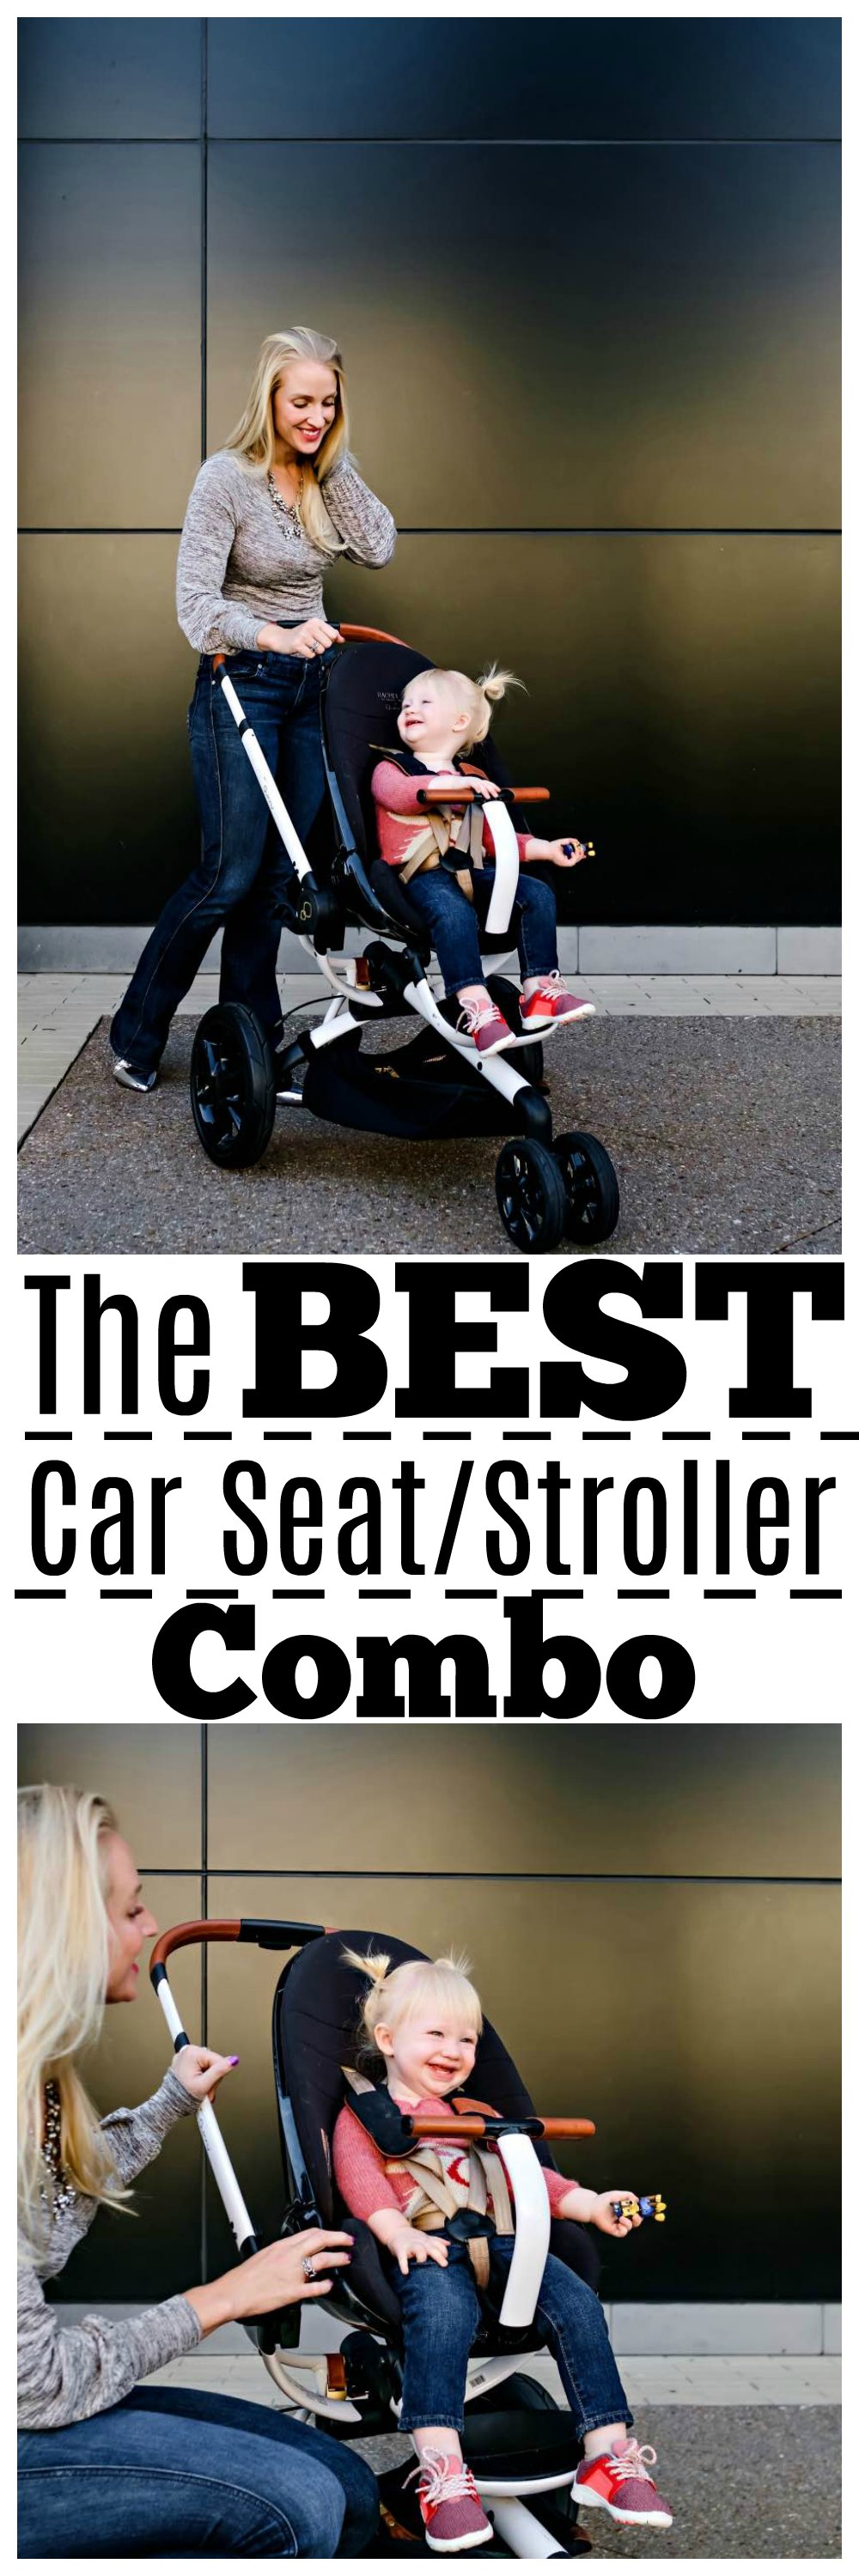 the best car seat stroller combo - Maxi Cosi Rachel Zoe Collection by Atlanta mom blogger Happily Hughes